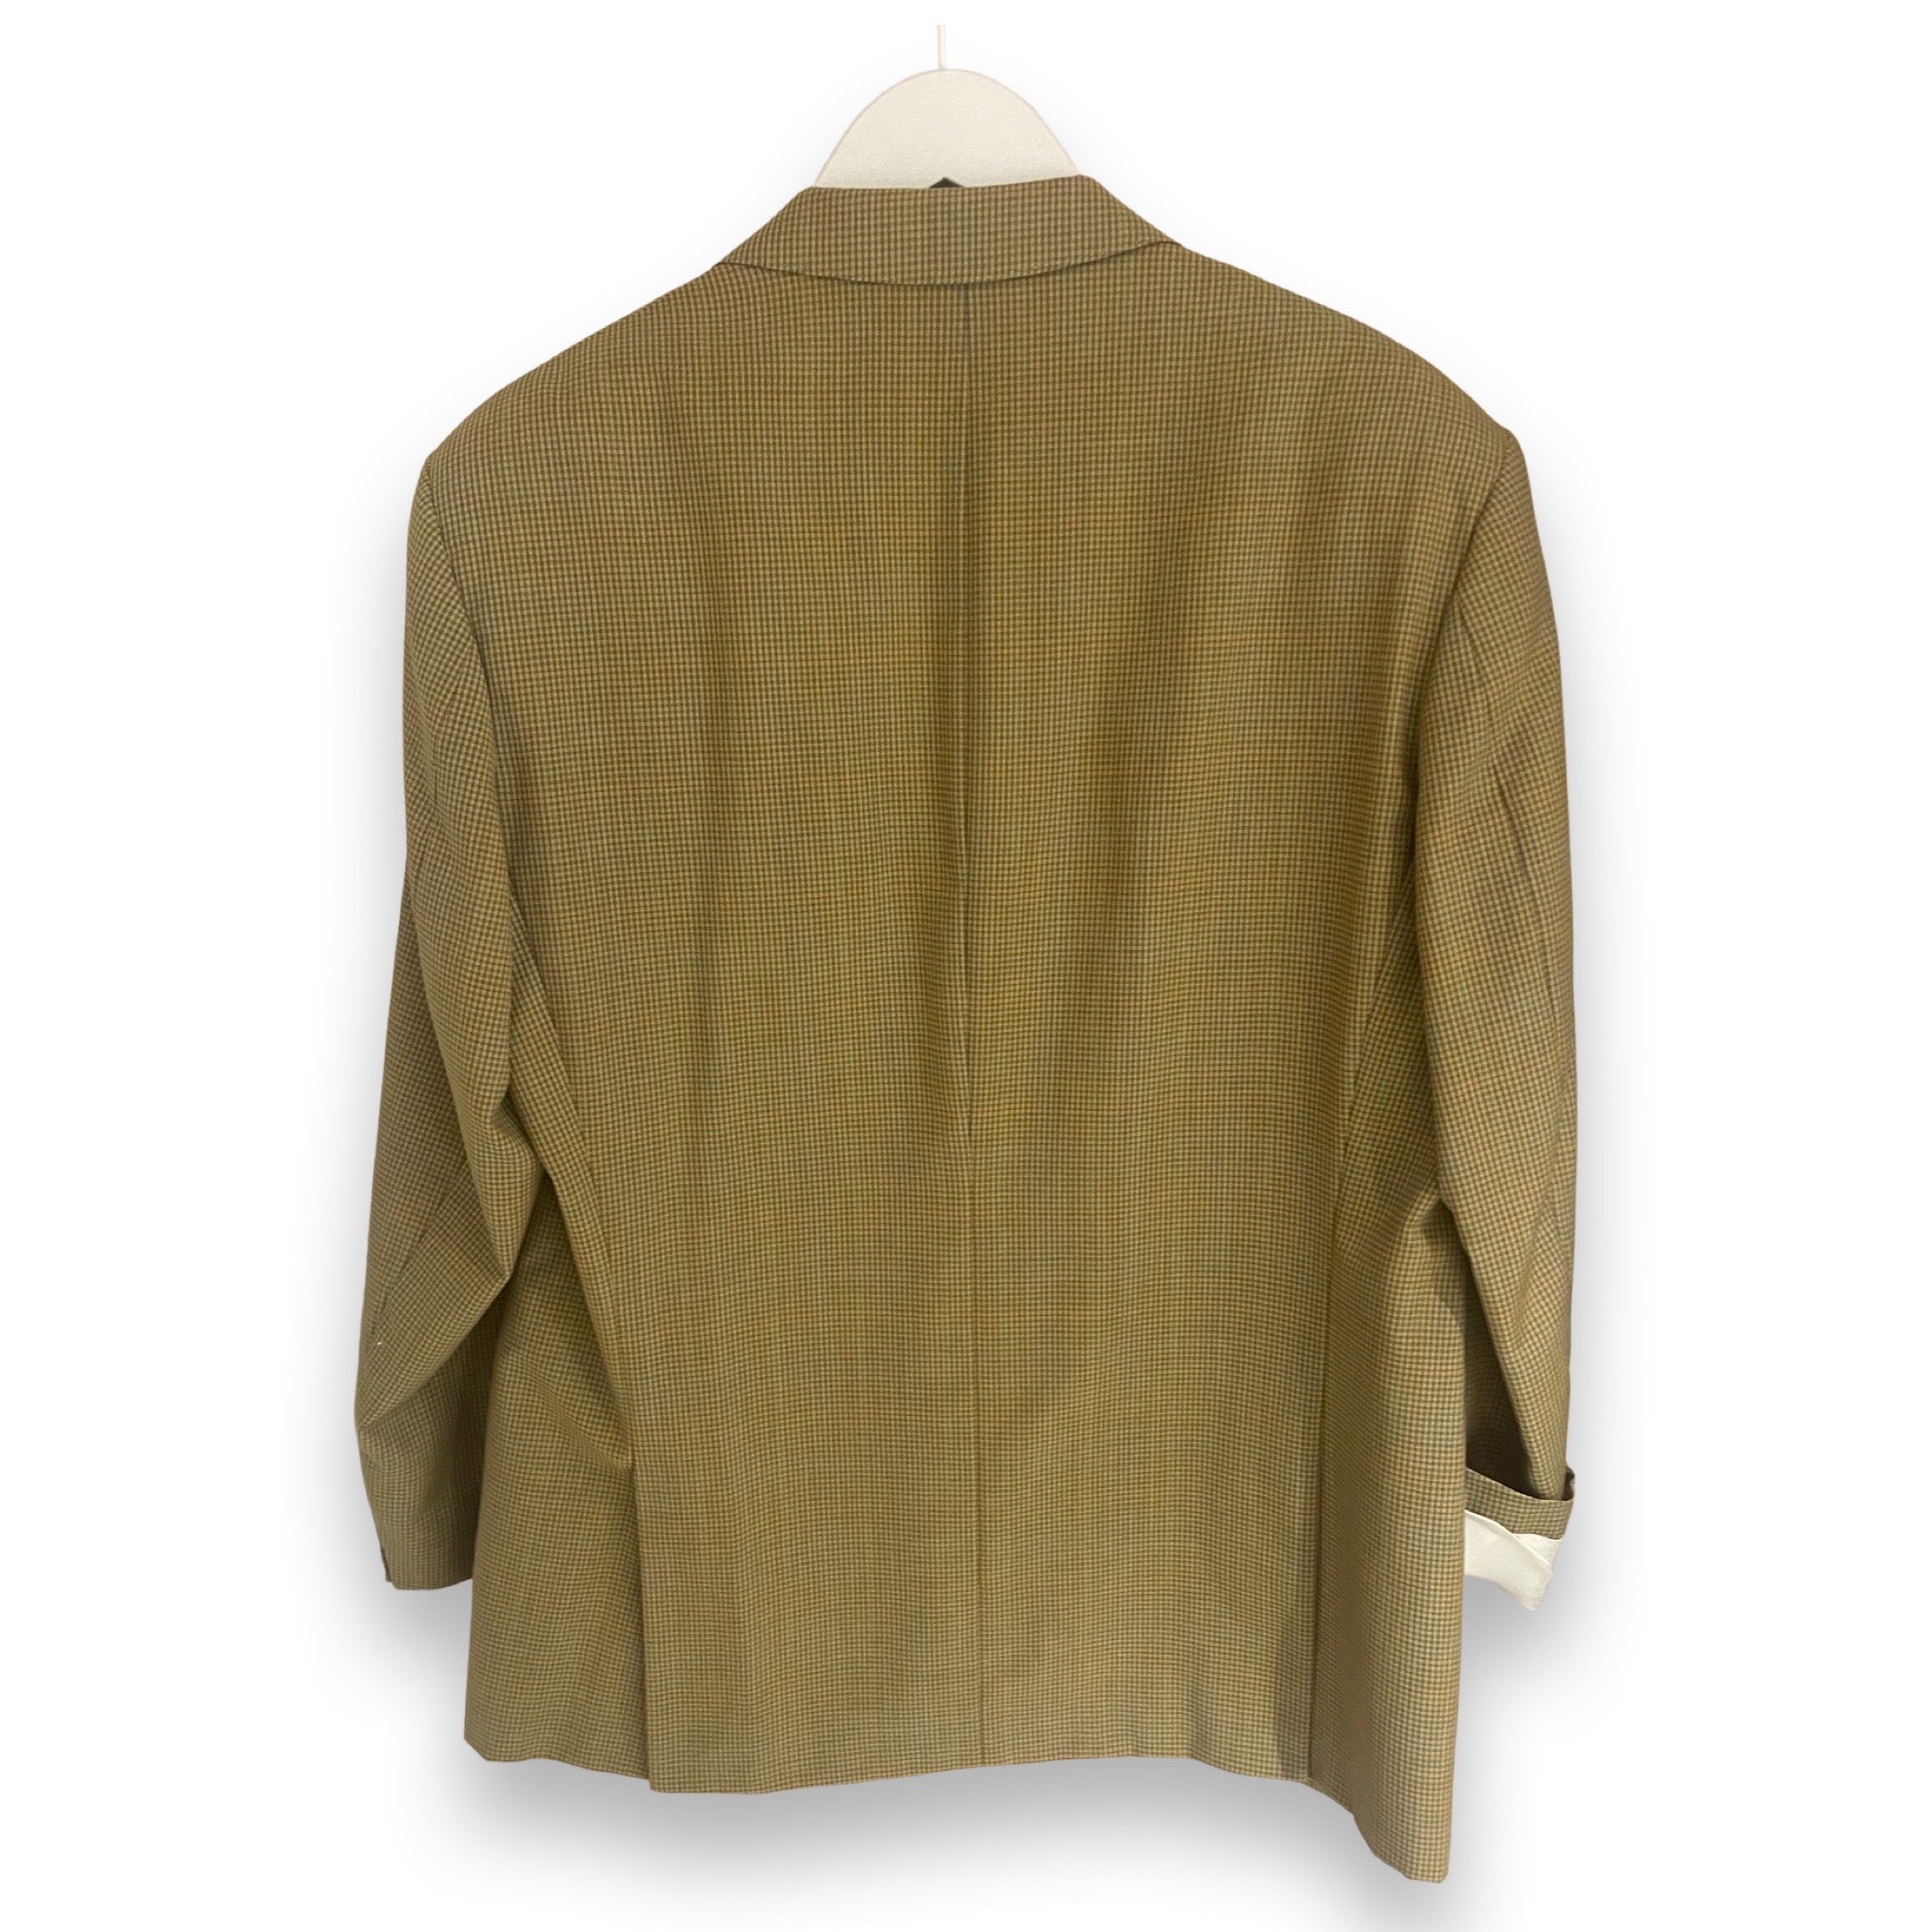 Khaki mini checked blazer by Yves Saint Laurent.